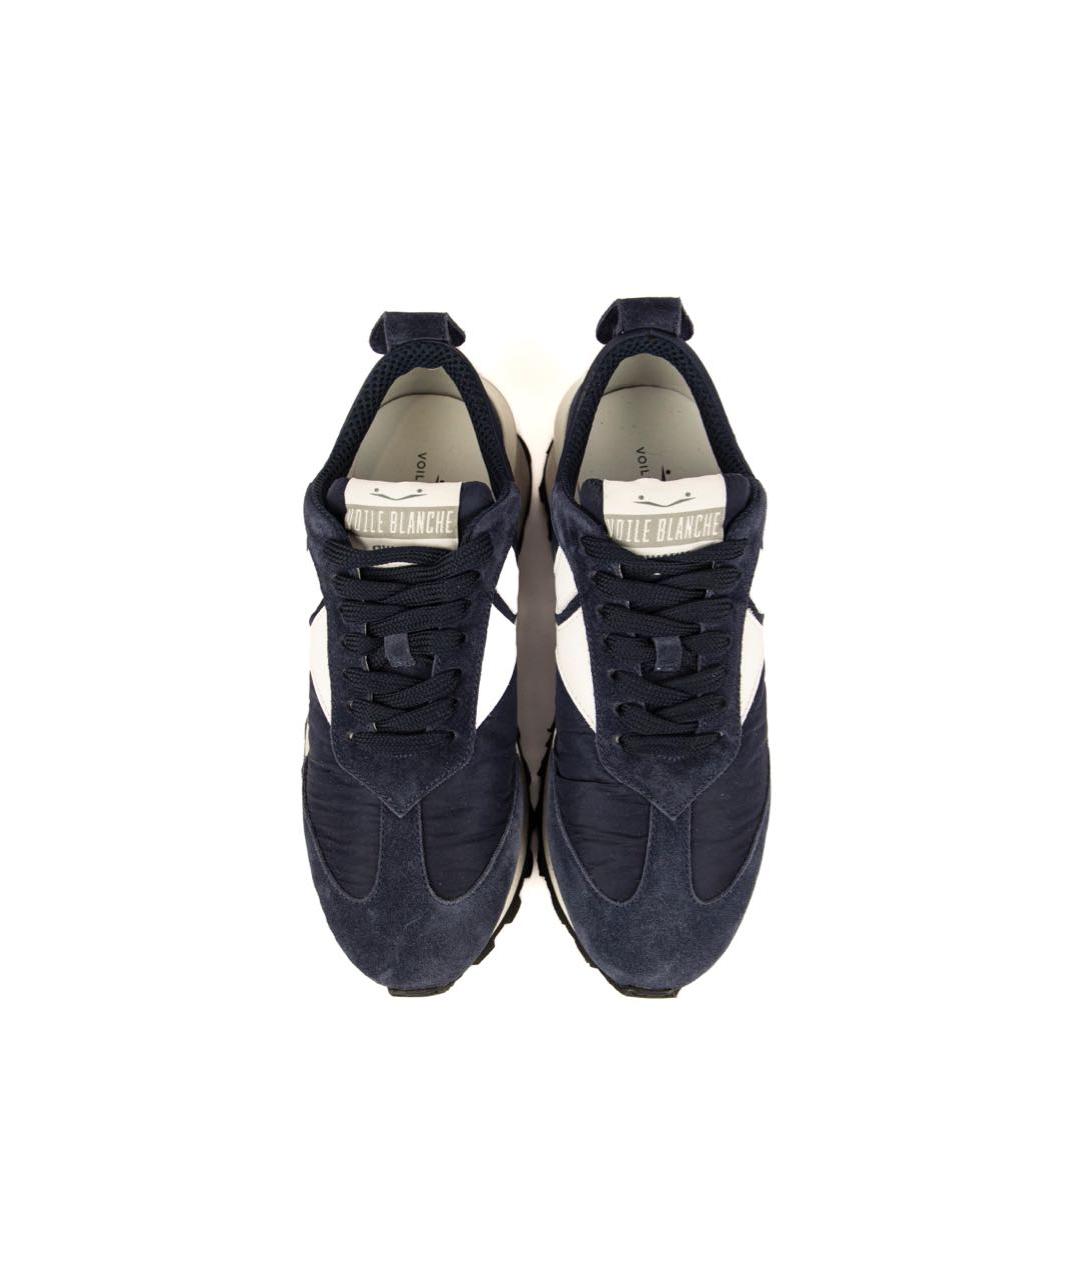 VOILE BLANCHE Темно-синие замшевые низкие кроссовки / кеды, фото 2